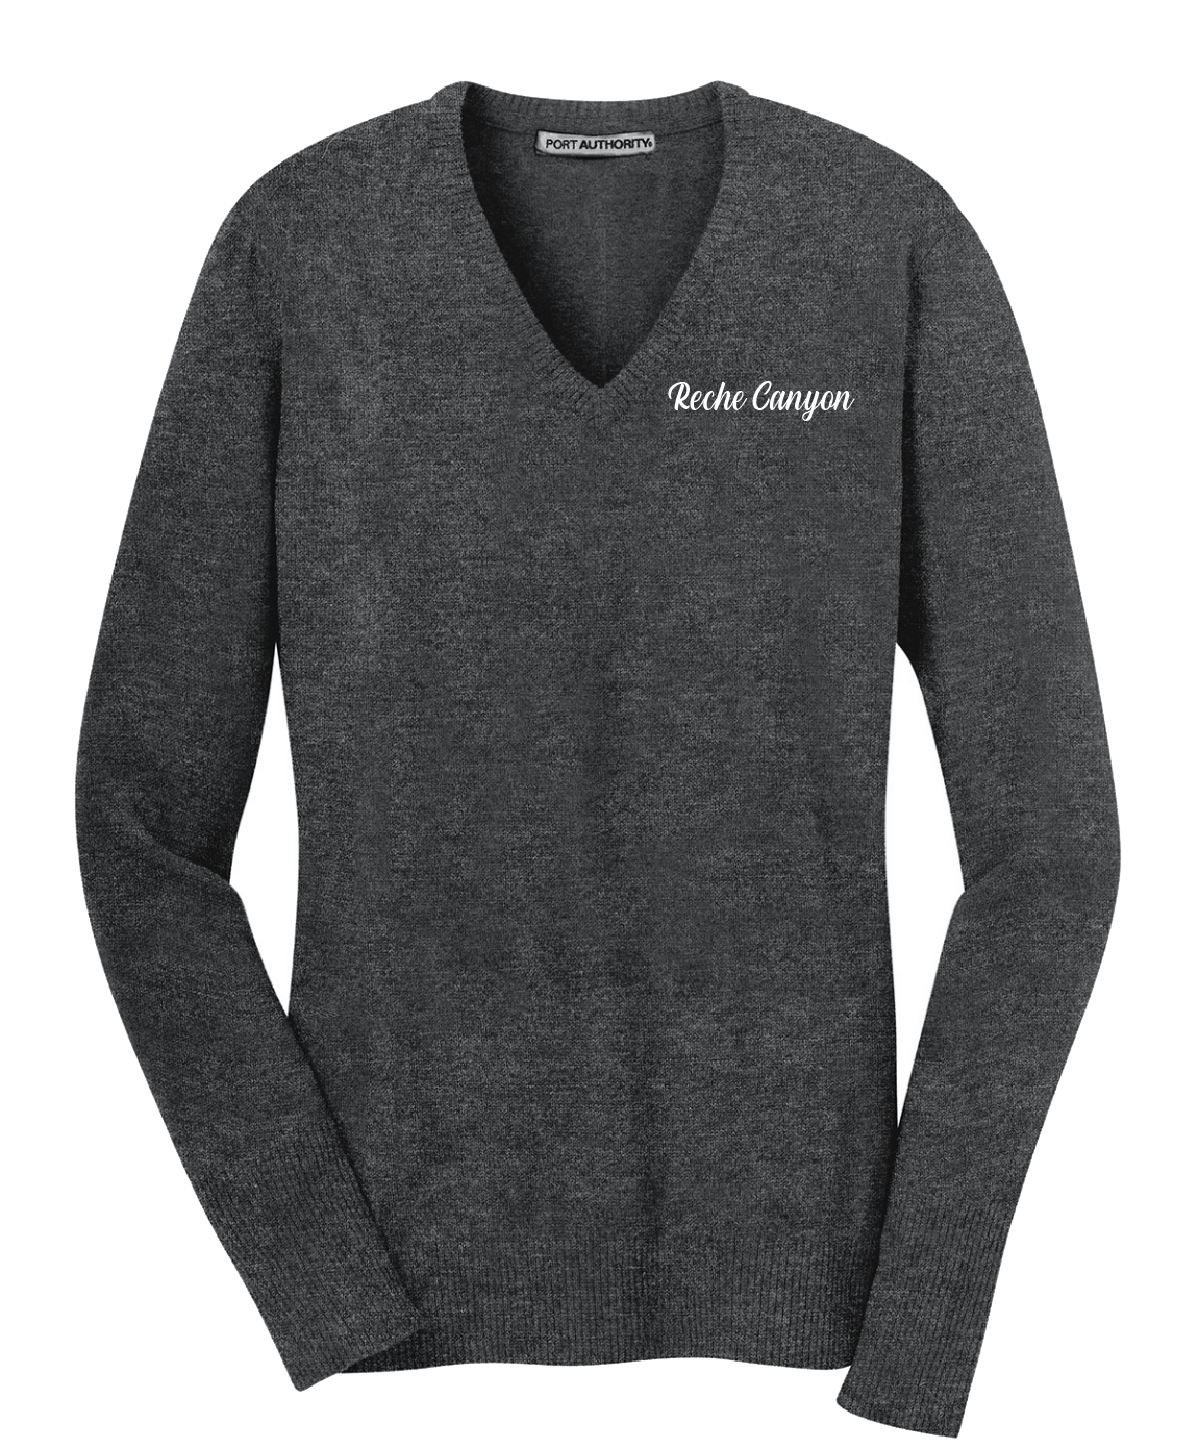 Reche Canyon - Port Authority® Ladies V-Neck Sweater